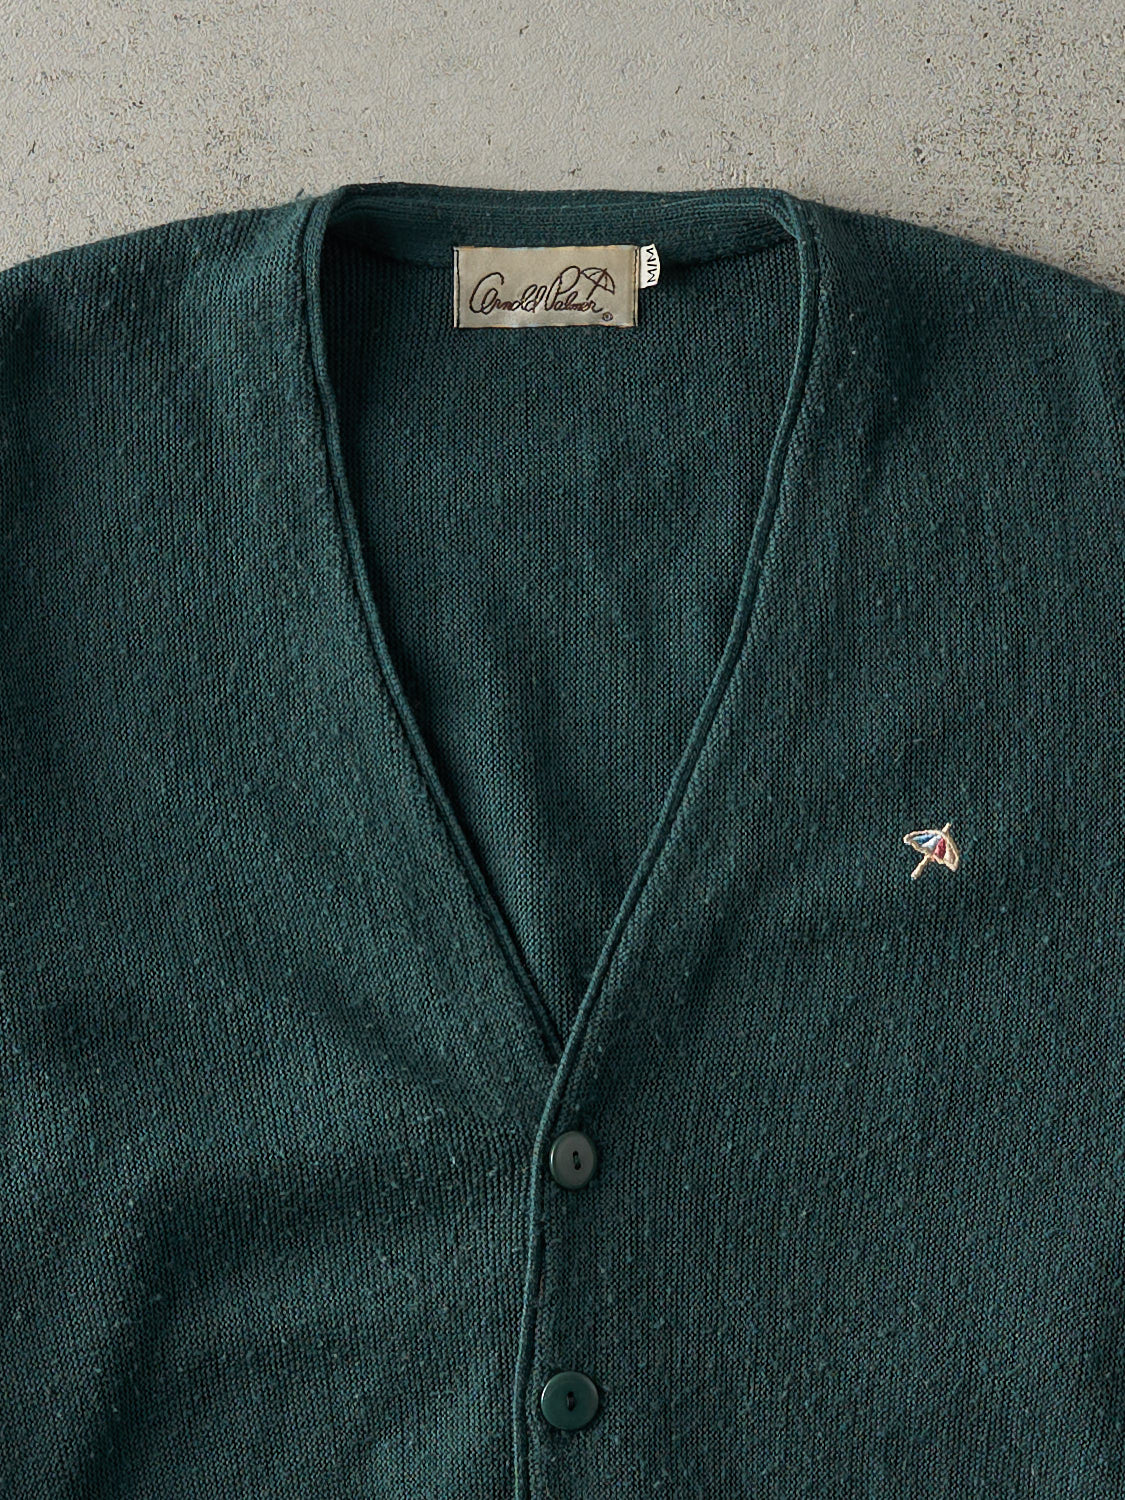 Vintage 90s Washed Green Arnold Palmer Knit Cardigan (M/L)